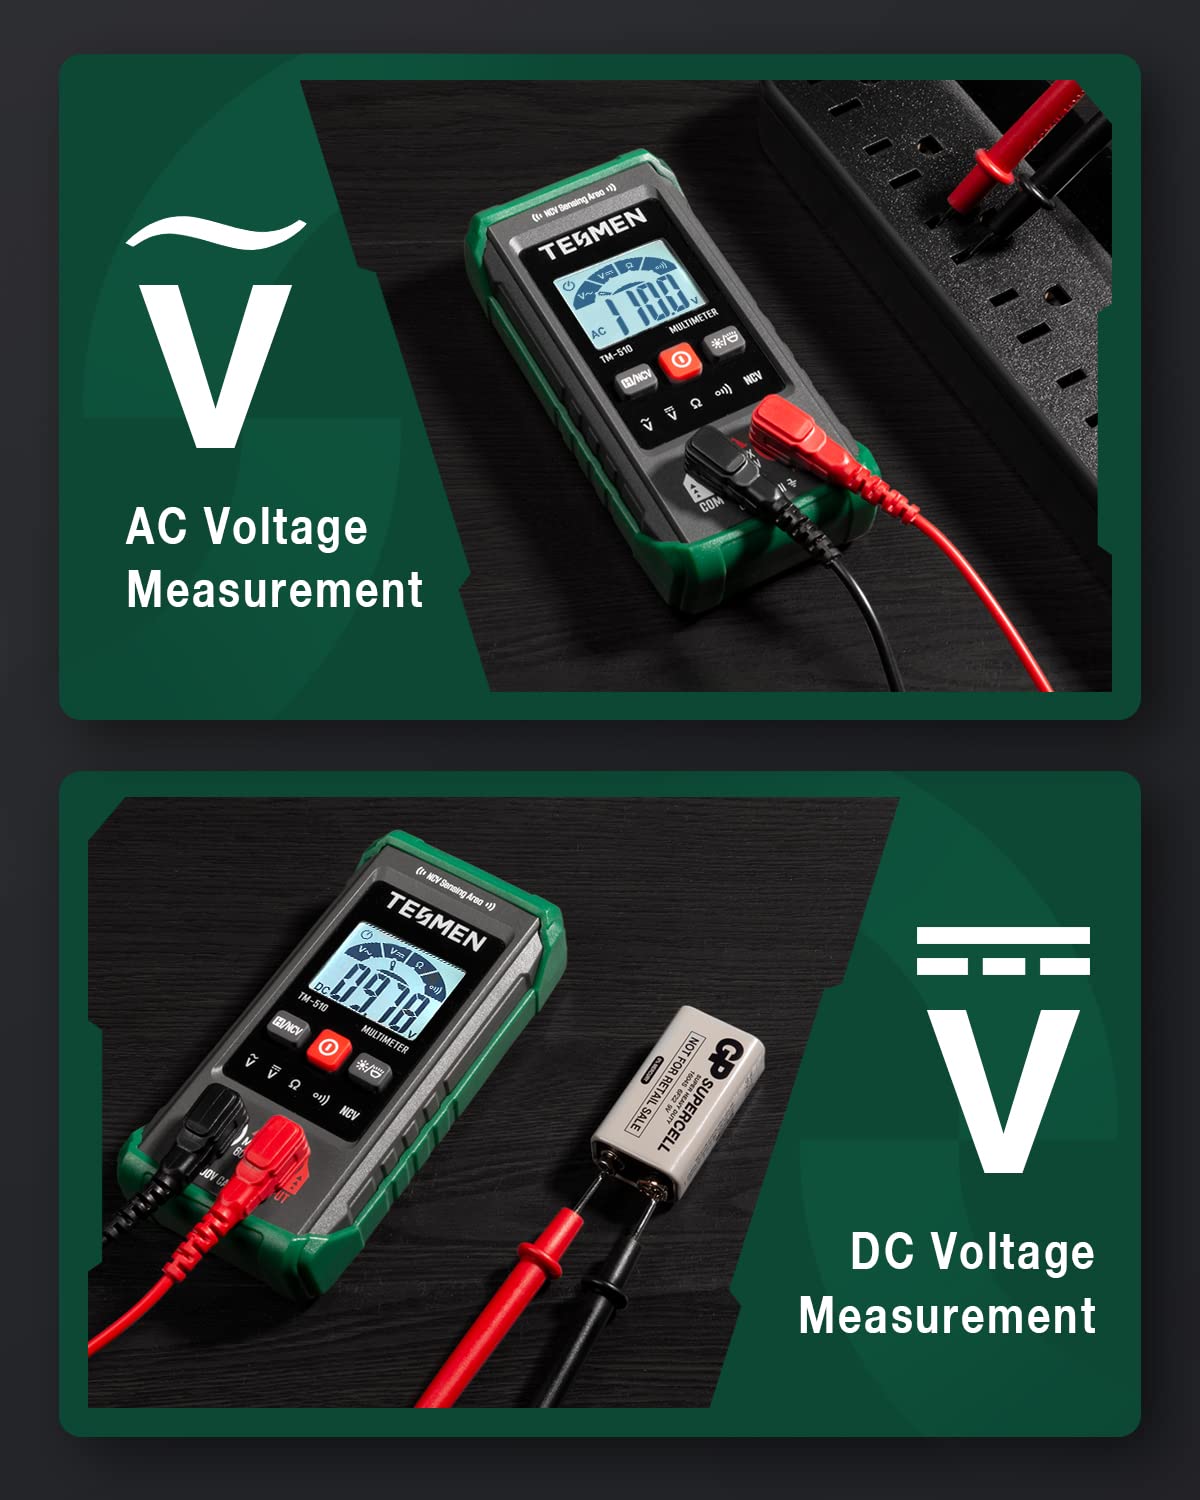 TESMEN TM-510 Digital Multimeter, 4000 Counts, Smart Measurement, Auto-Ranging Voltmeter; Voltage Tester with Non-Contact Voltage Function, Measures AC/DC Voltage, Resistance, Continuity – Green